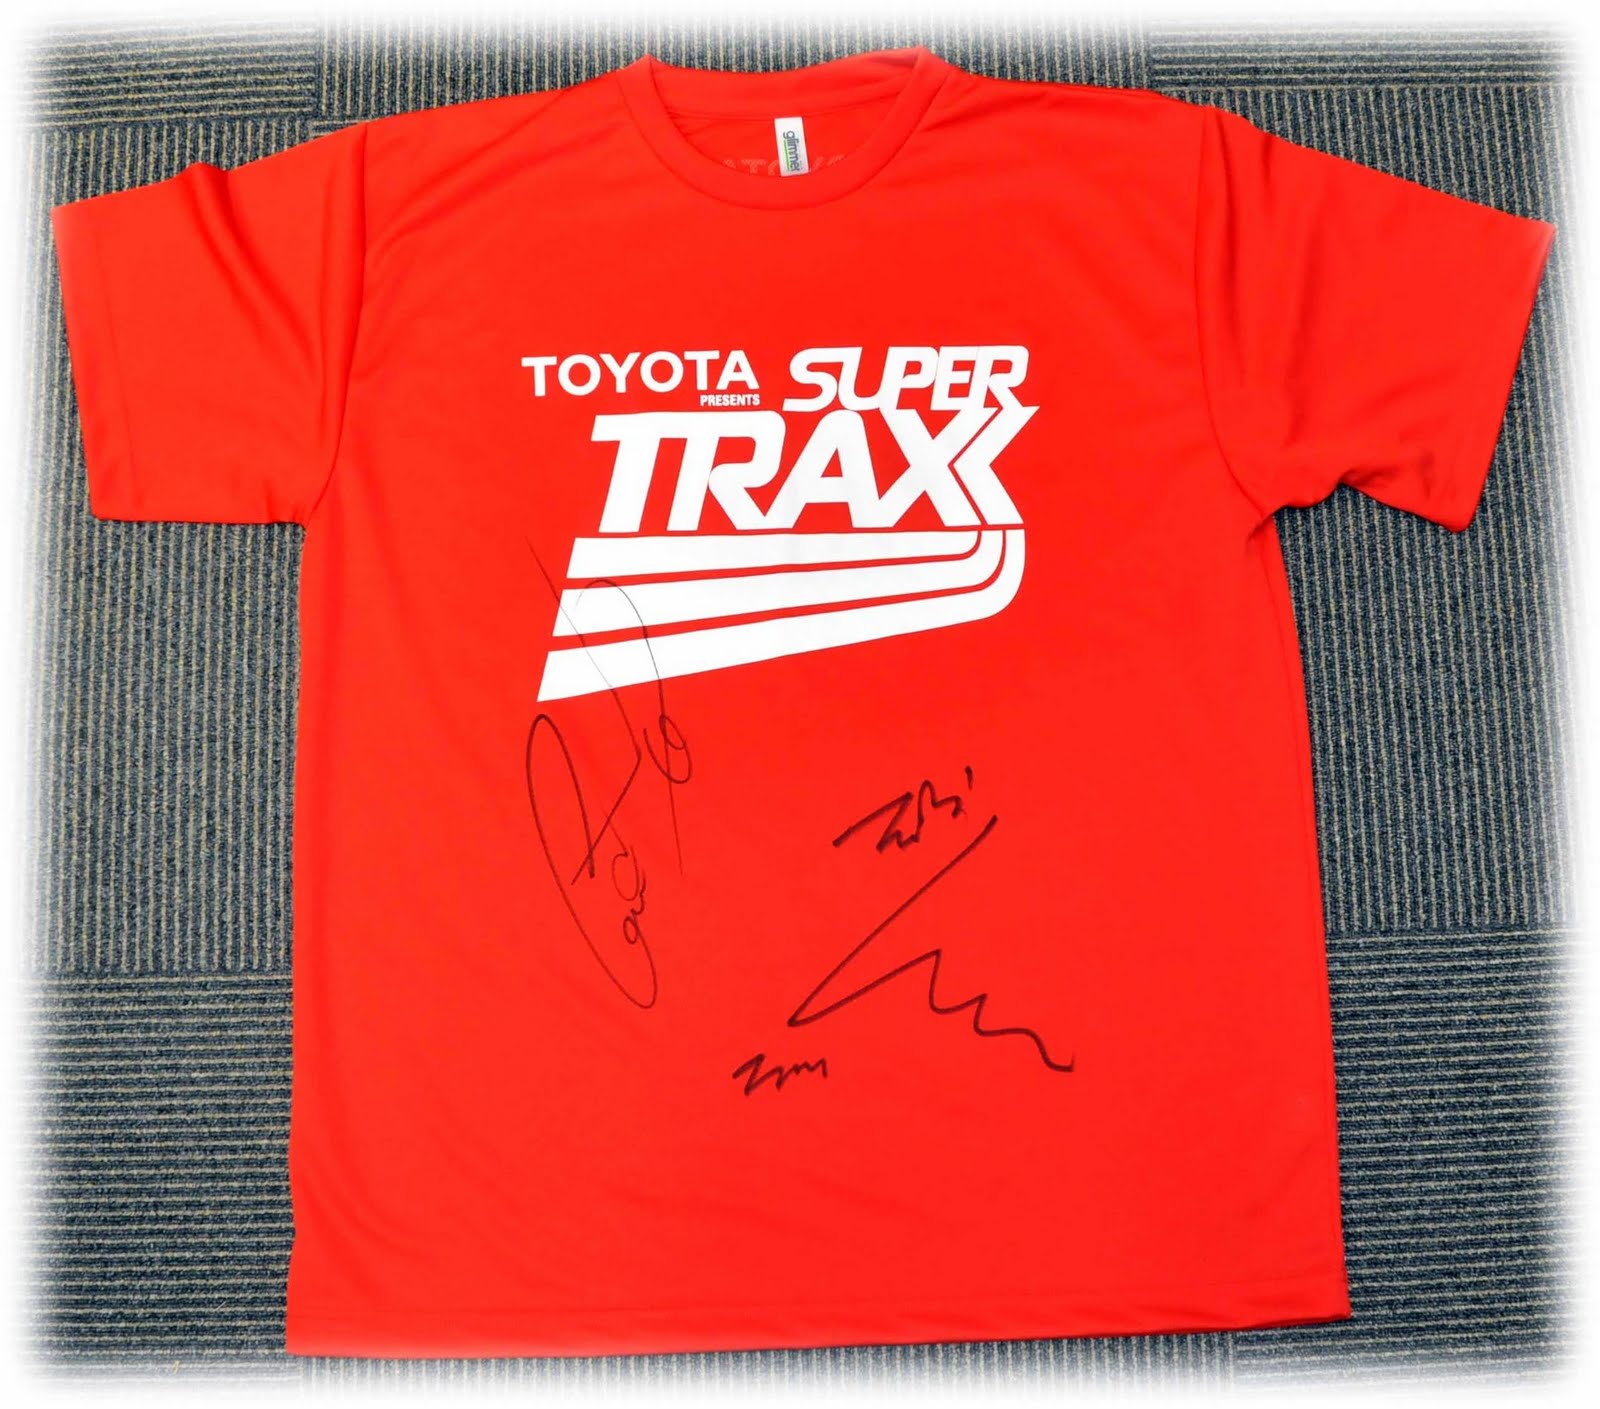 taeyang - [Pics] GD&TOP y Taeyang Items autografiados para el SuperTraxx Signed+gdtop+shirt+for+supertraxx